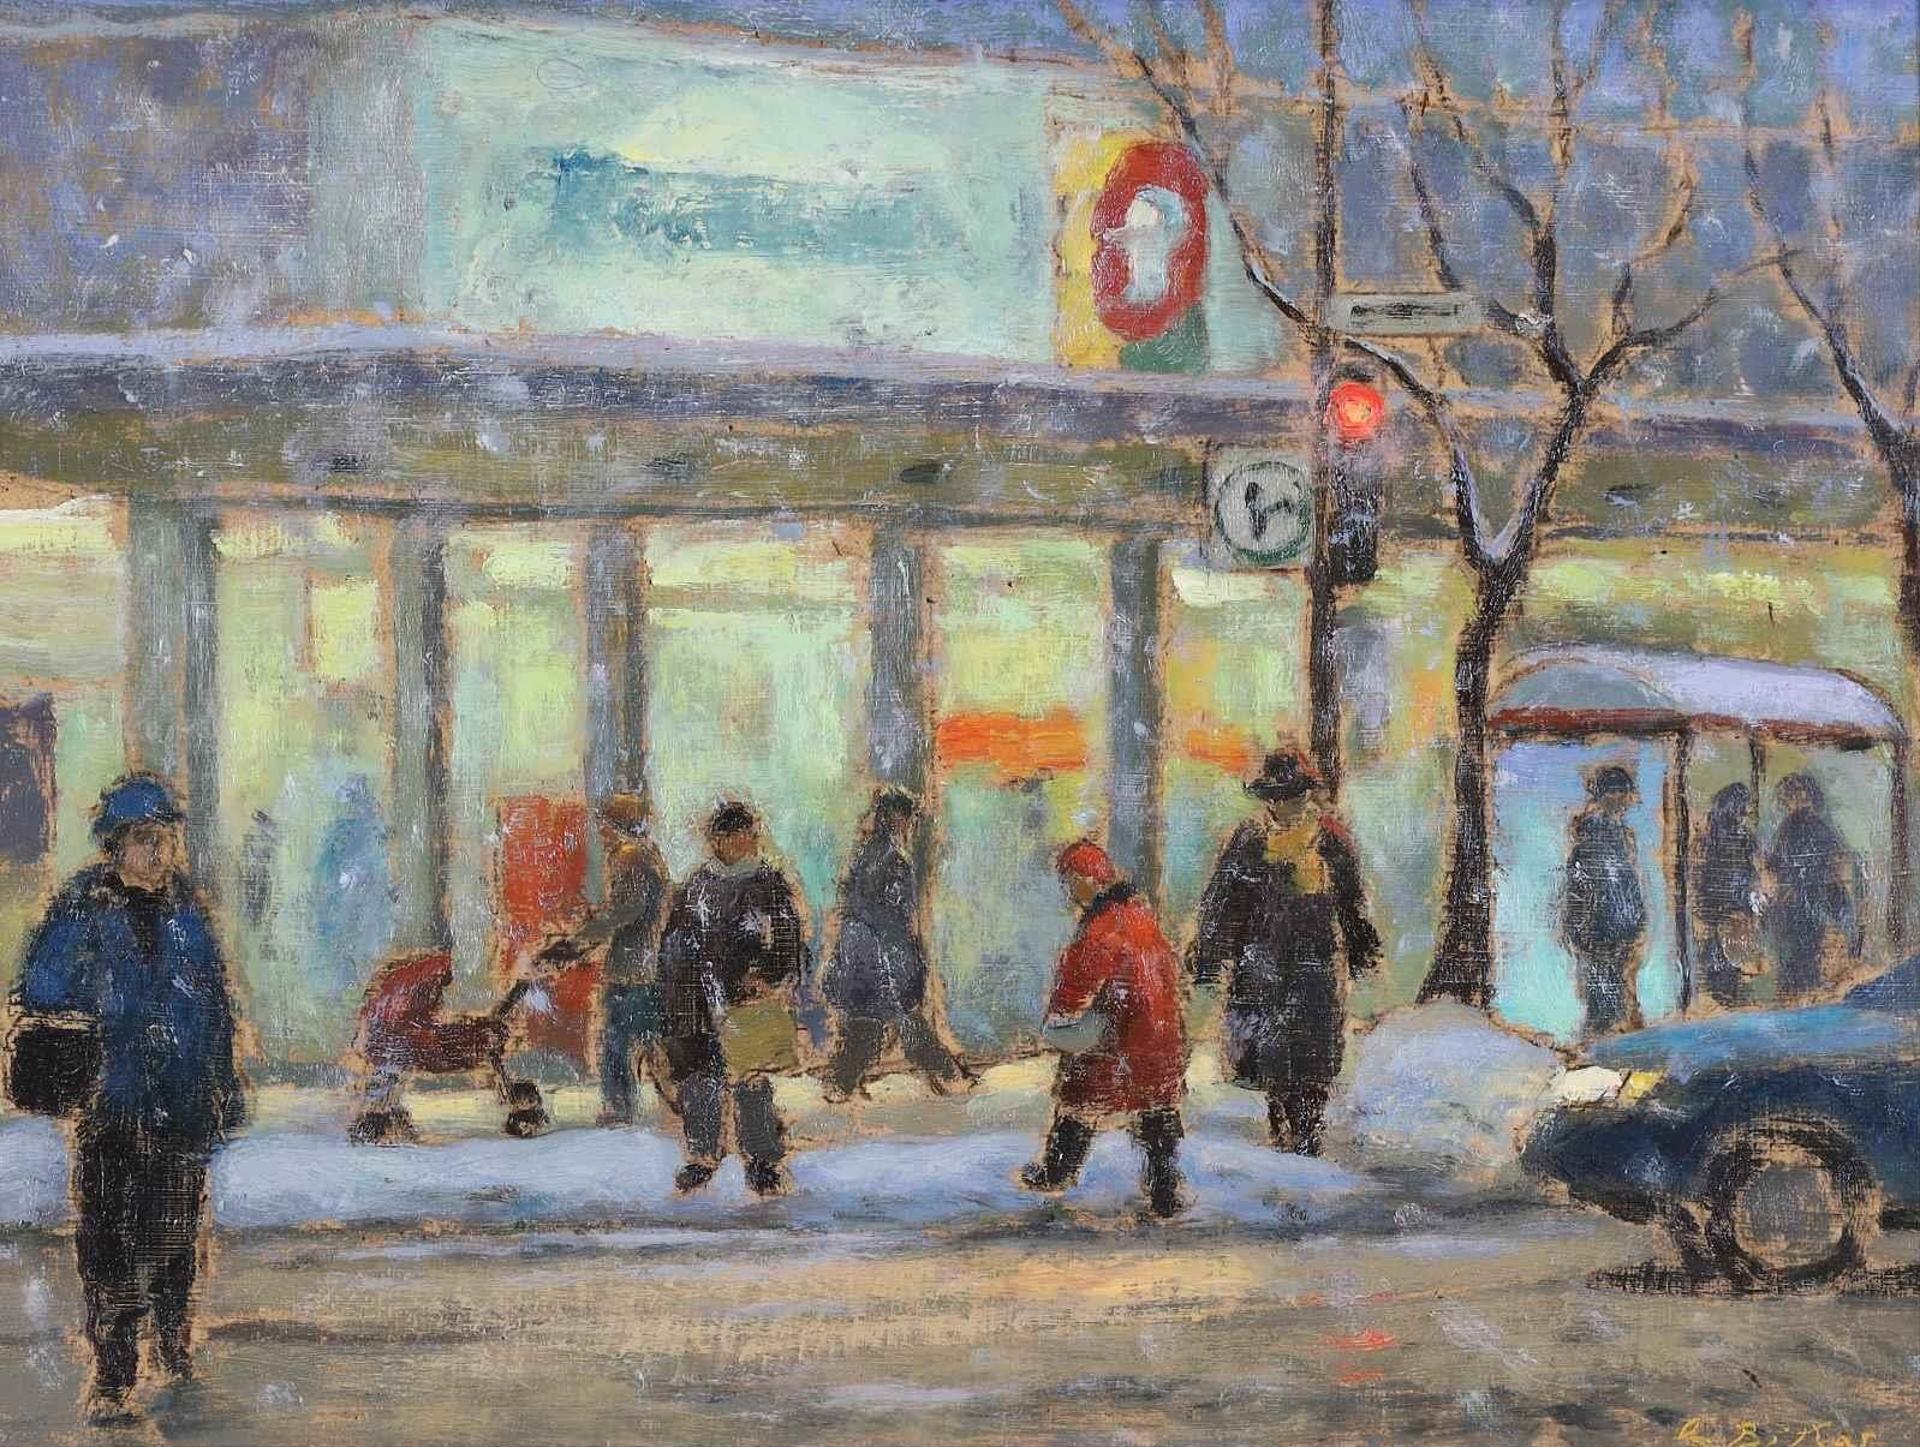 Antoine Bittar (1957) - Snow & Neons (Montreal); 2008